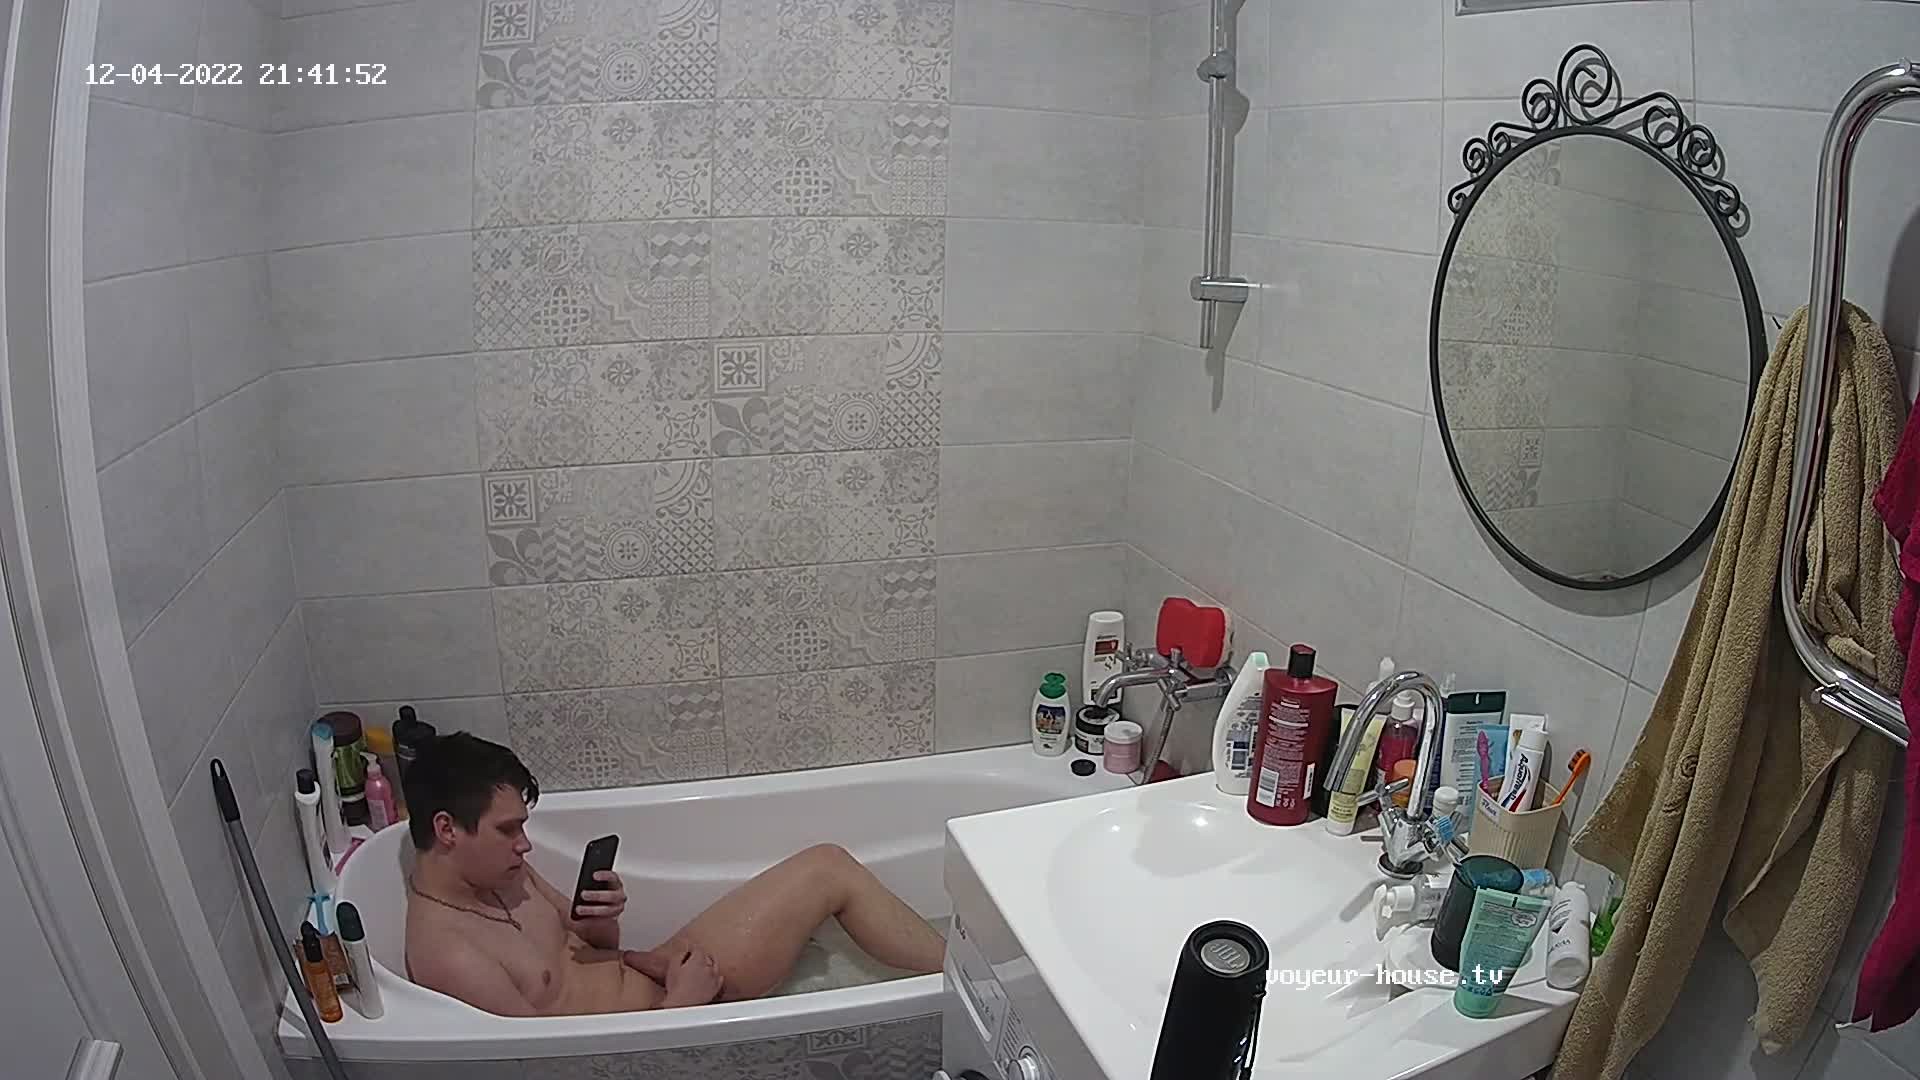 Nolan jerking off in the bath 4 Dec 2022